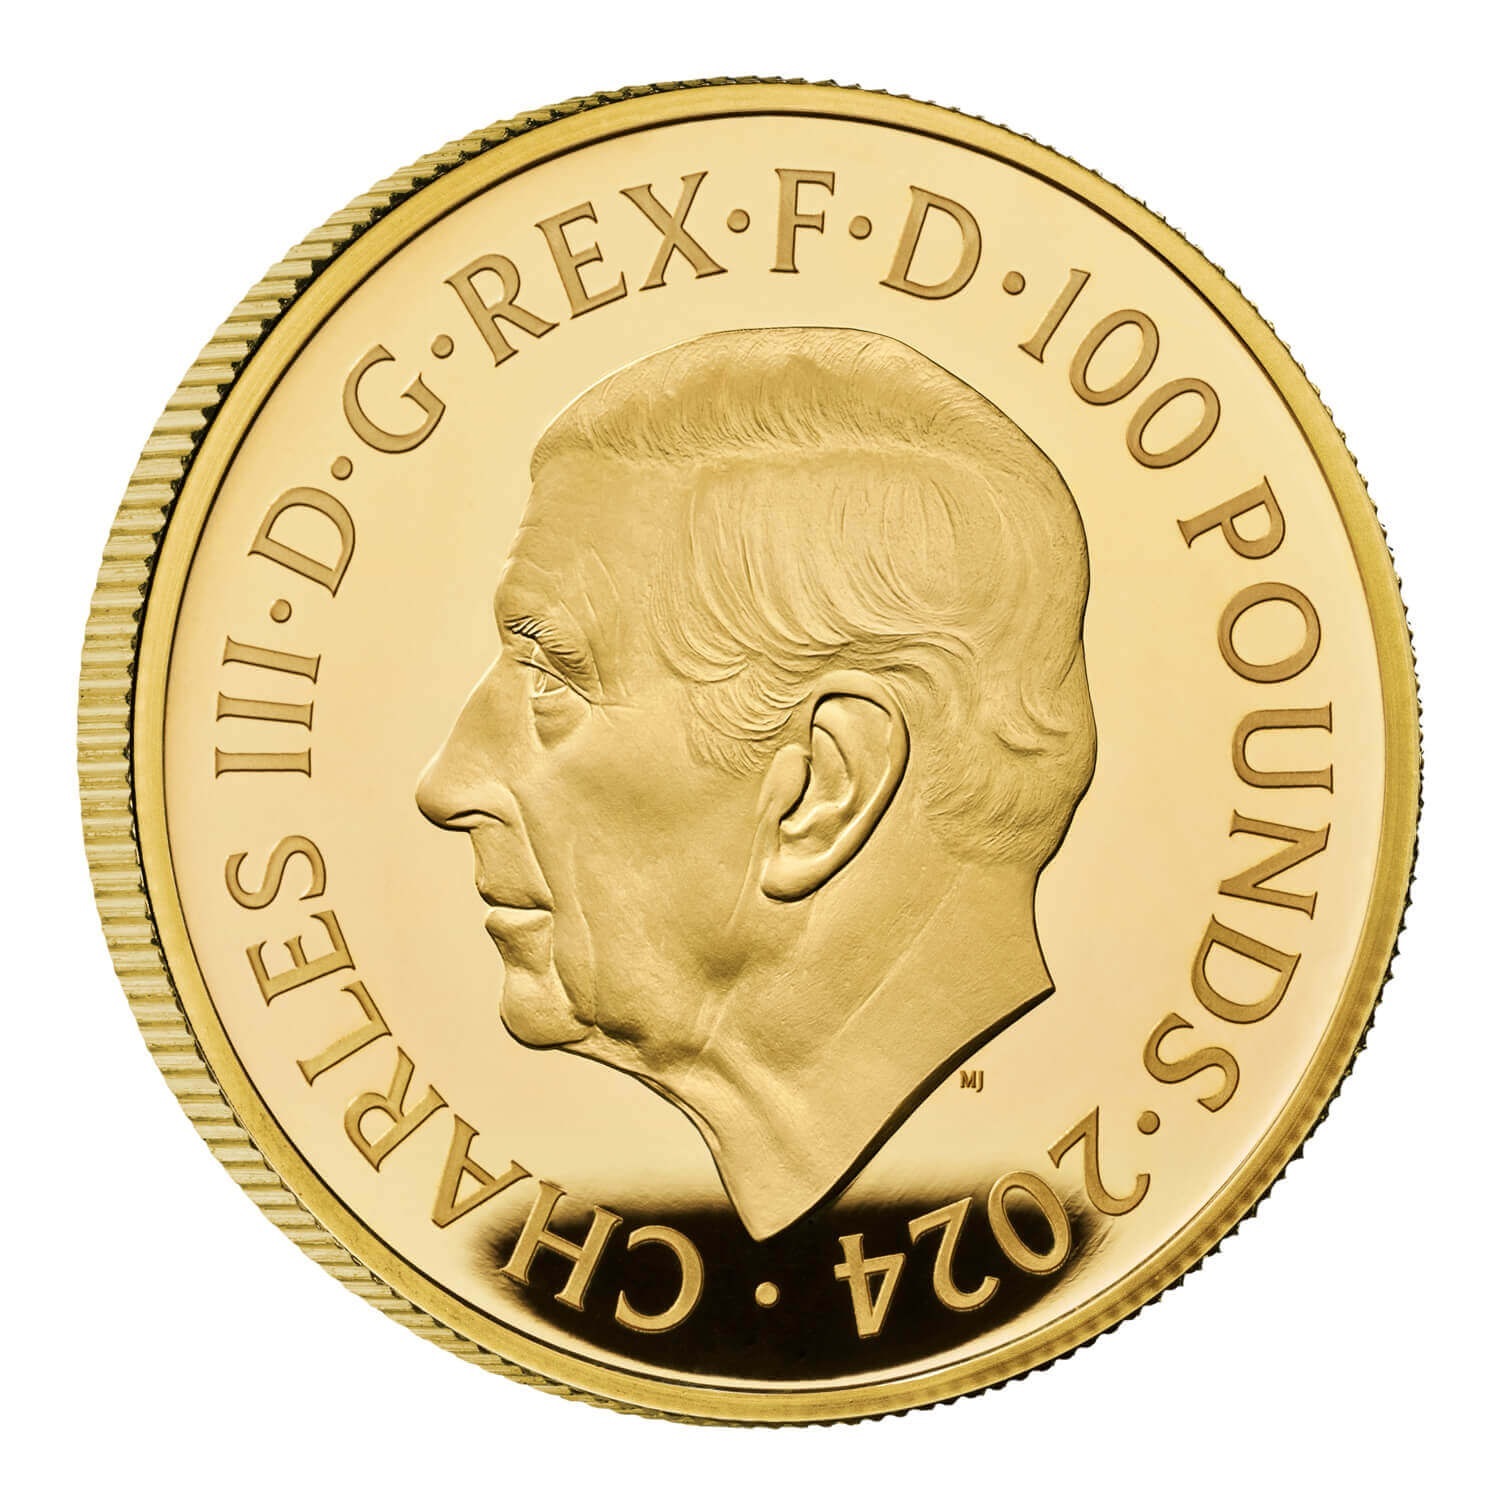 (W185.100.P.2024.UK24GM1G) 100 Pounds United Kingdom 2024 1 oz Proof gold - George Michael Obverse (zoom)